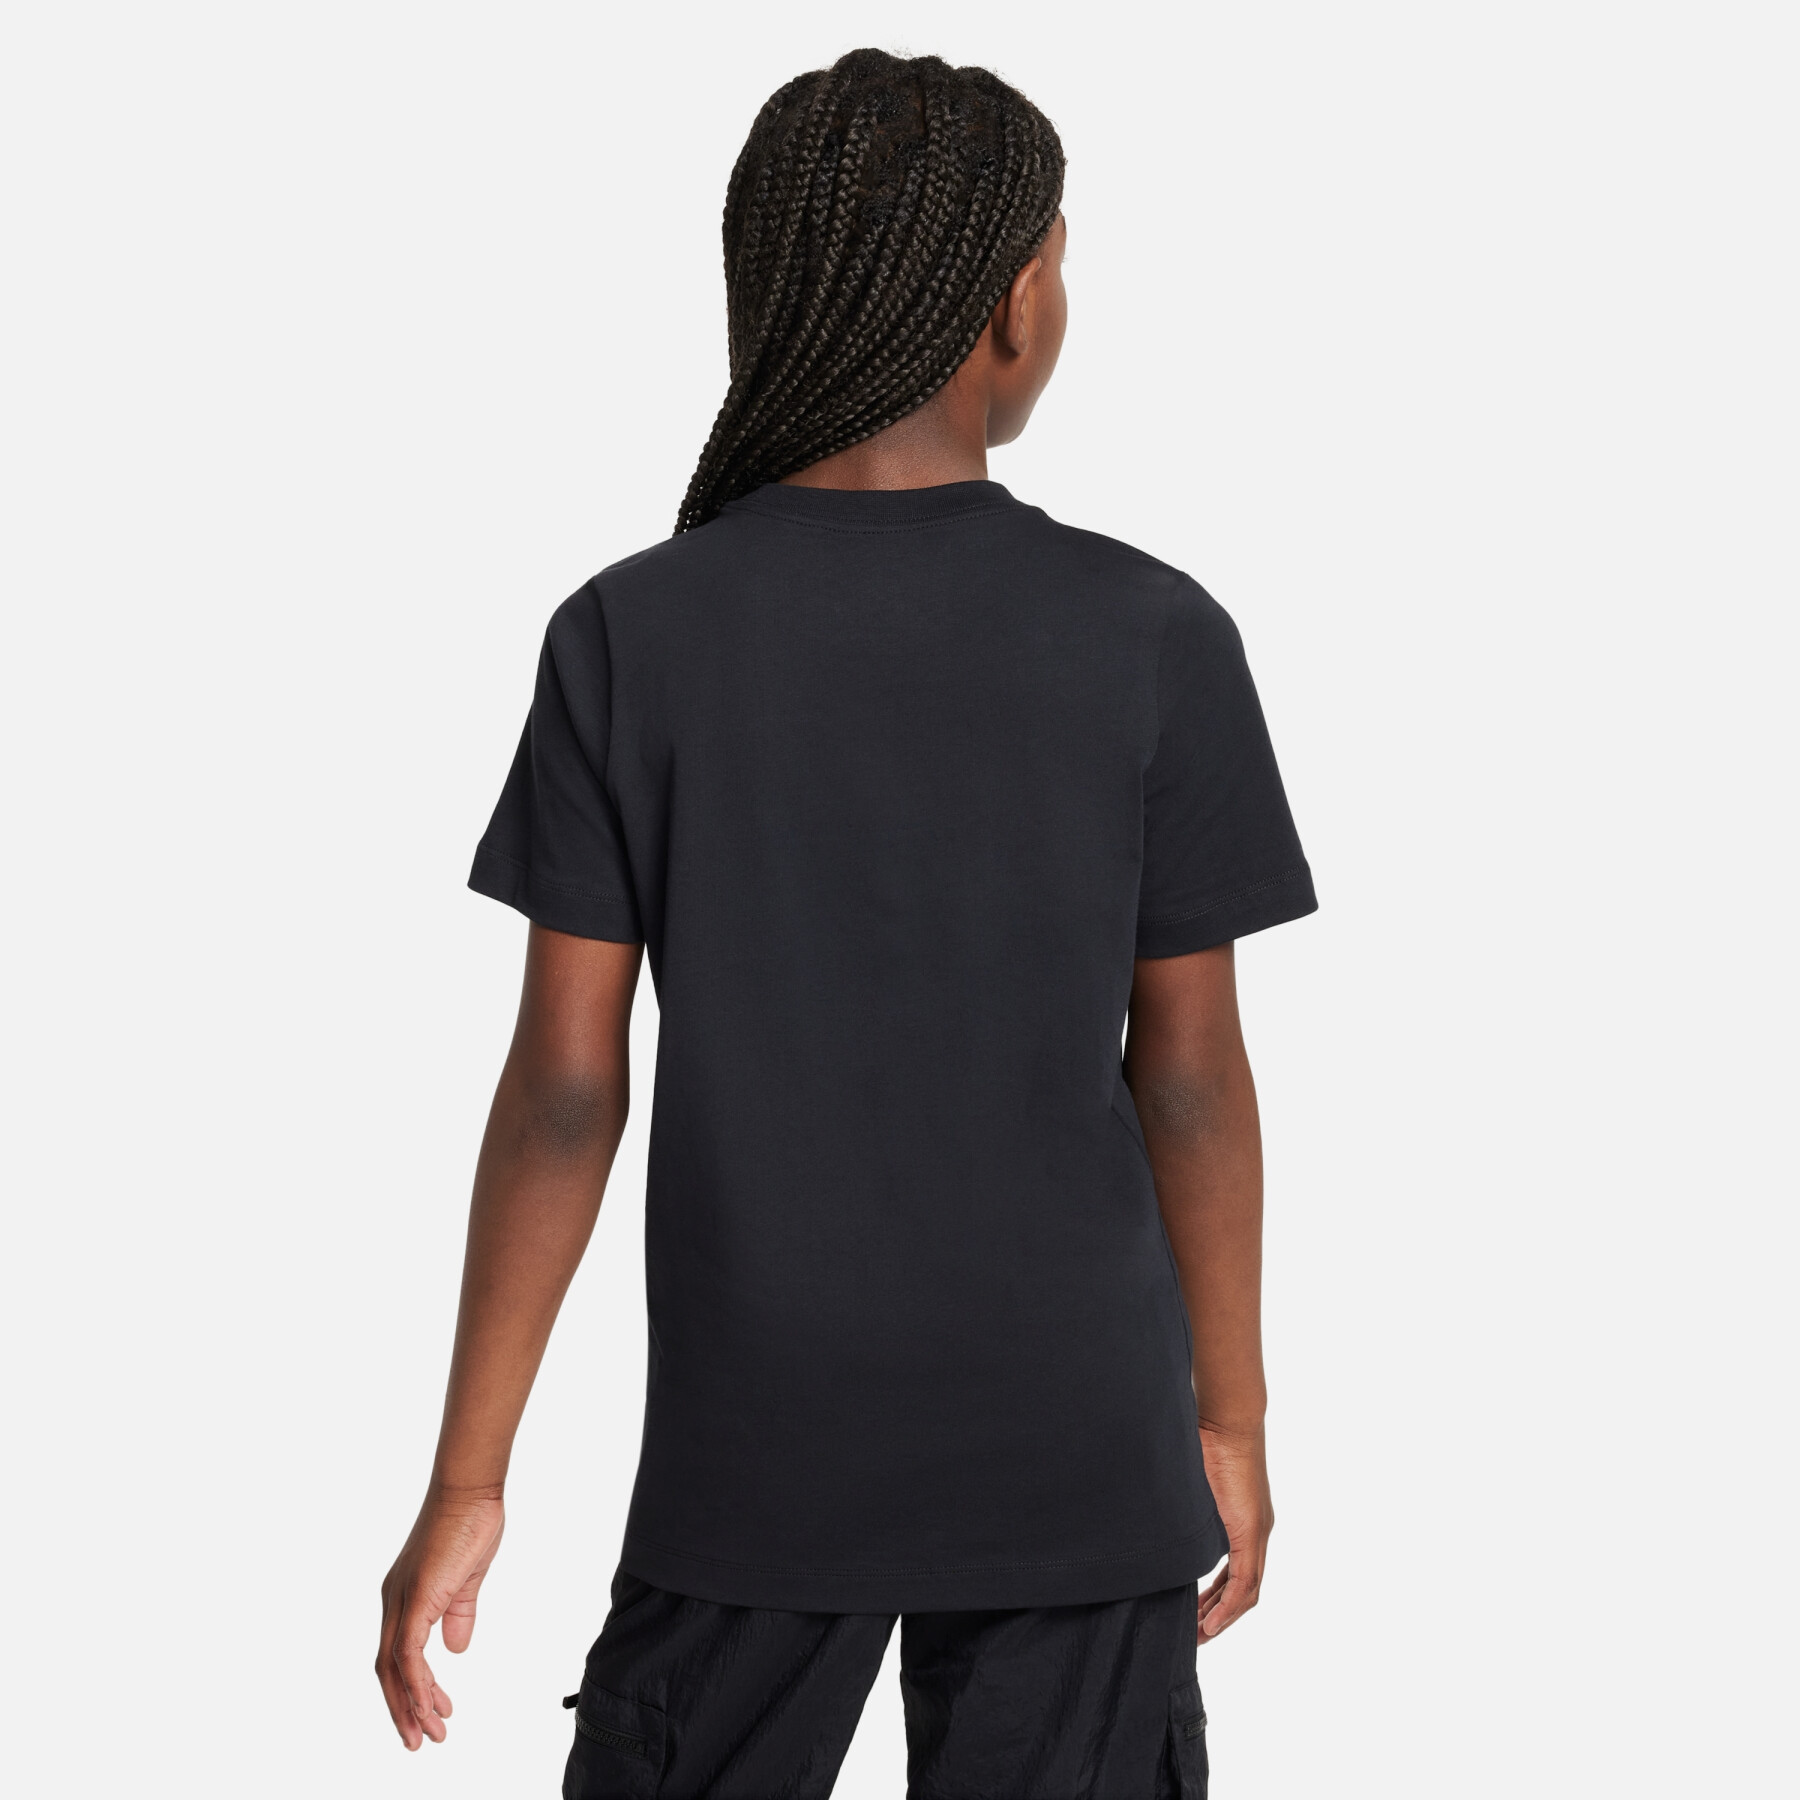 T-shirt enfant Nike